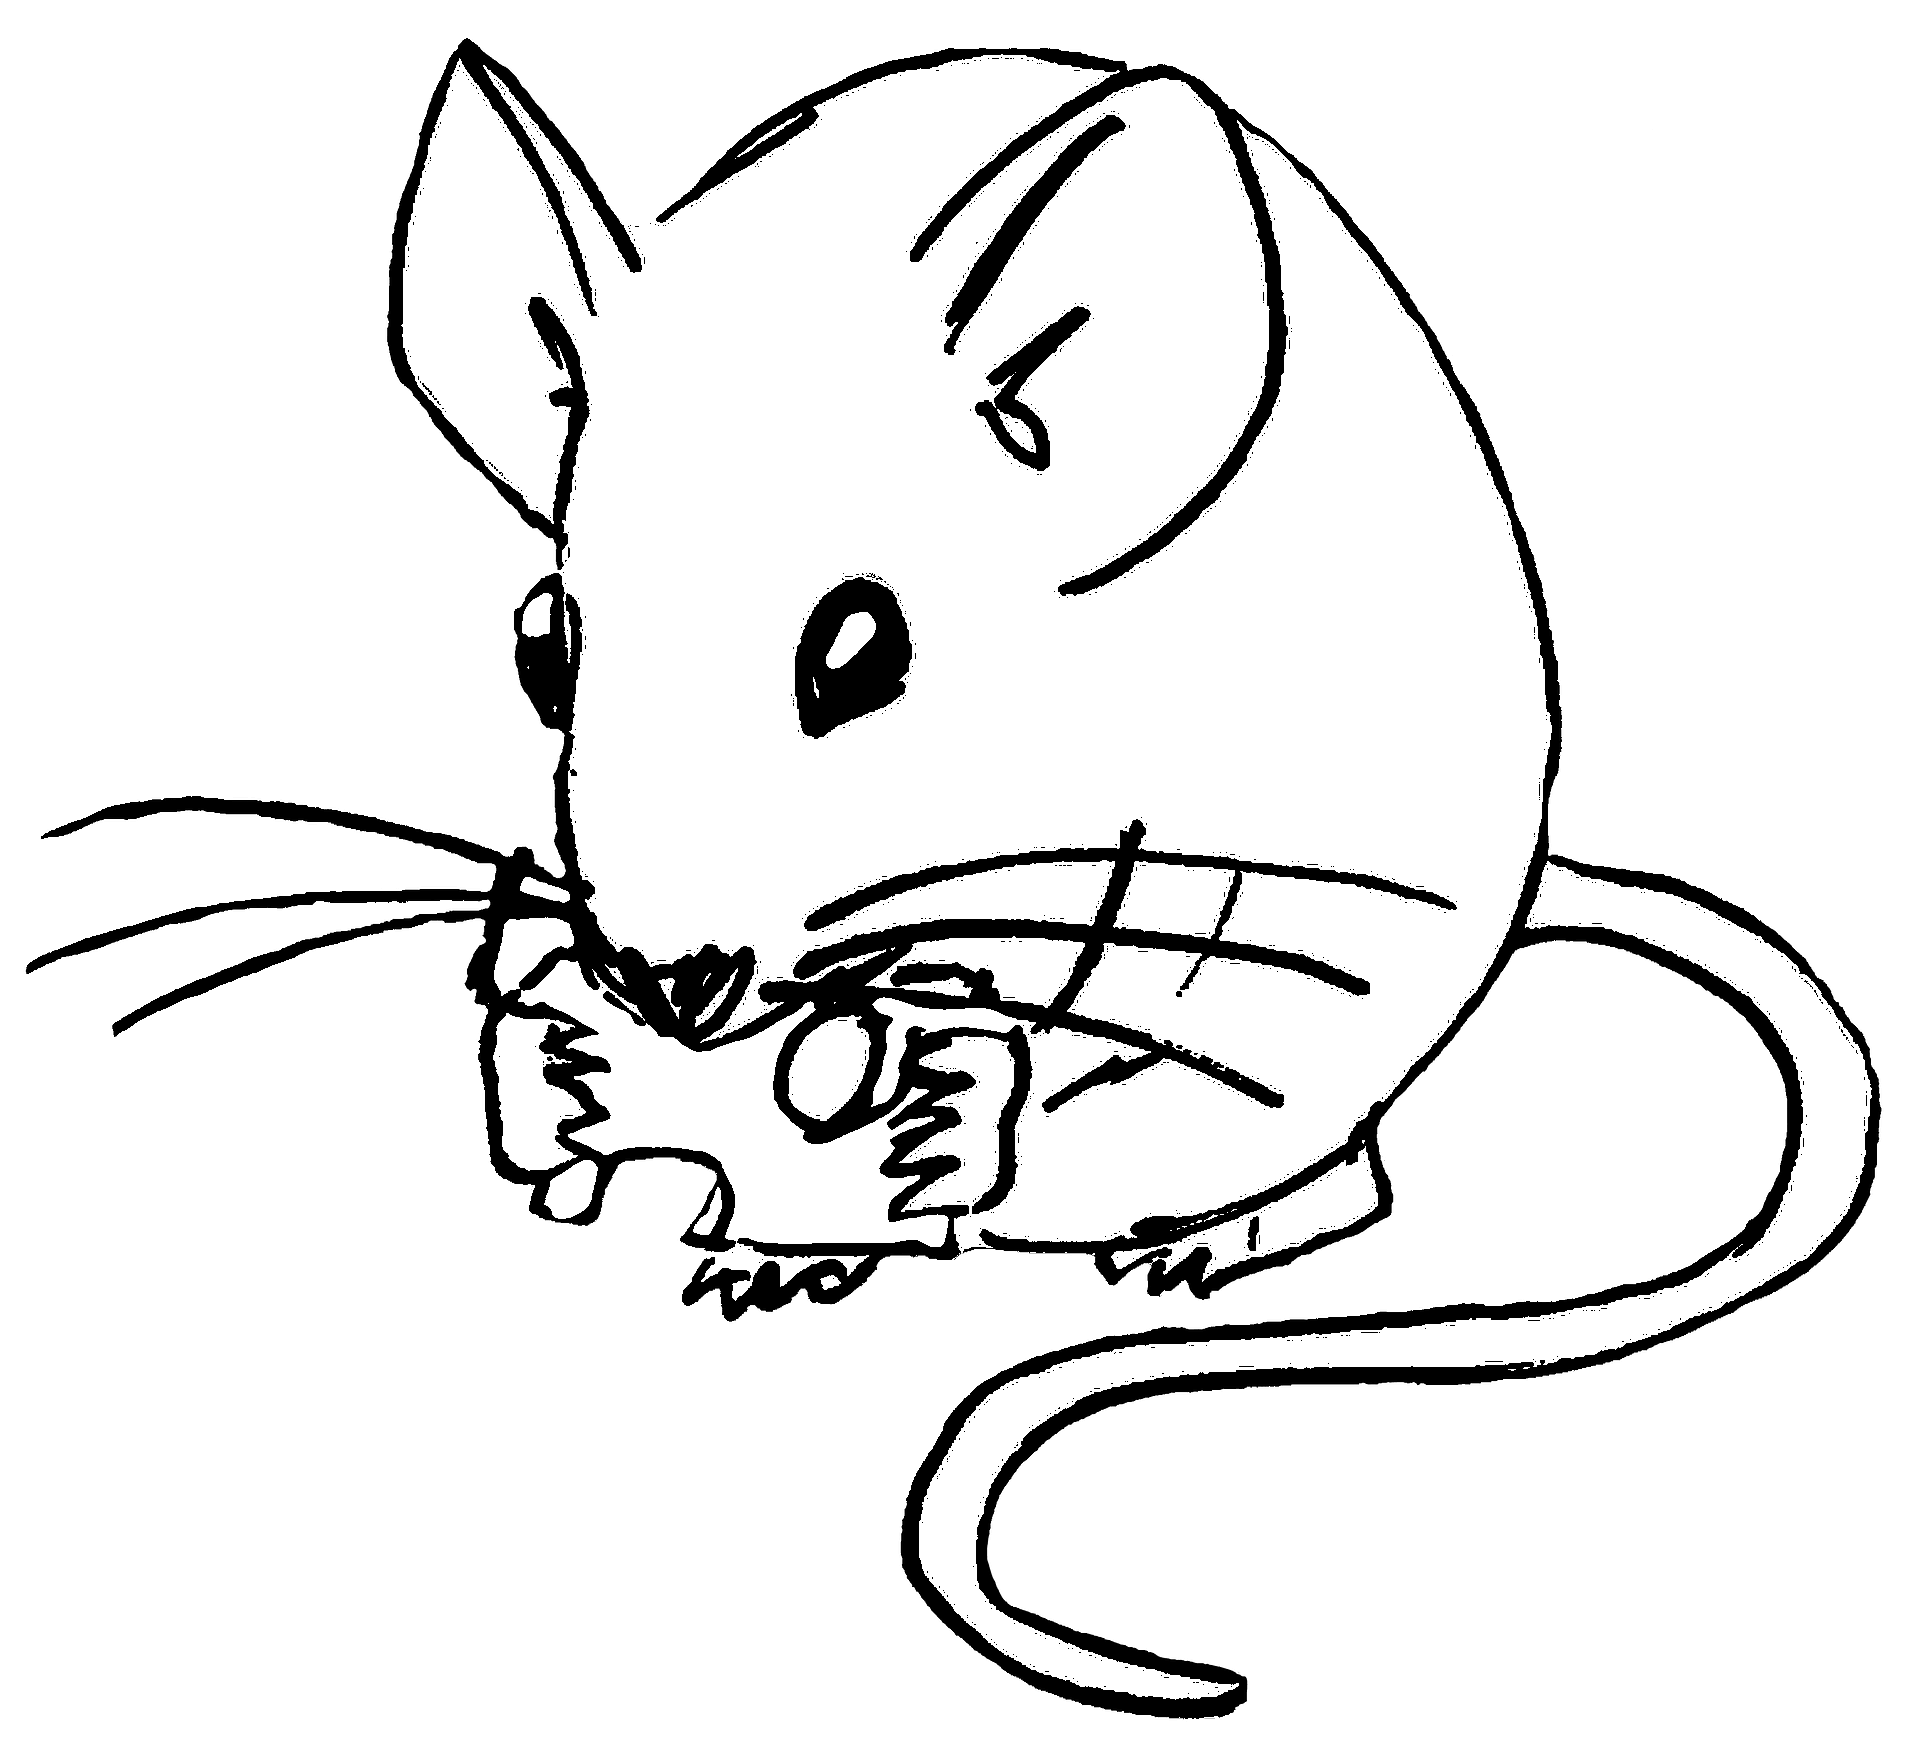 Dibujo para colorear de un ratón